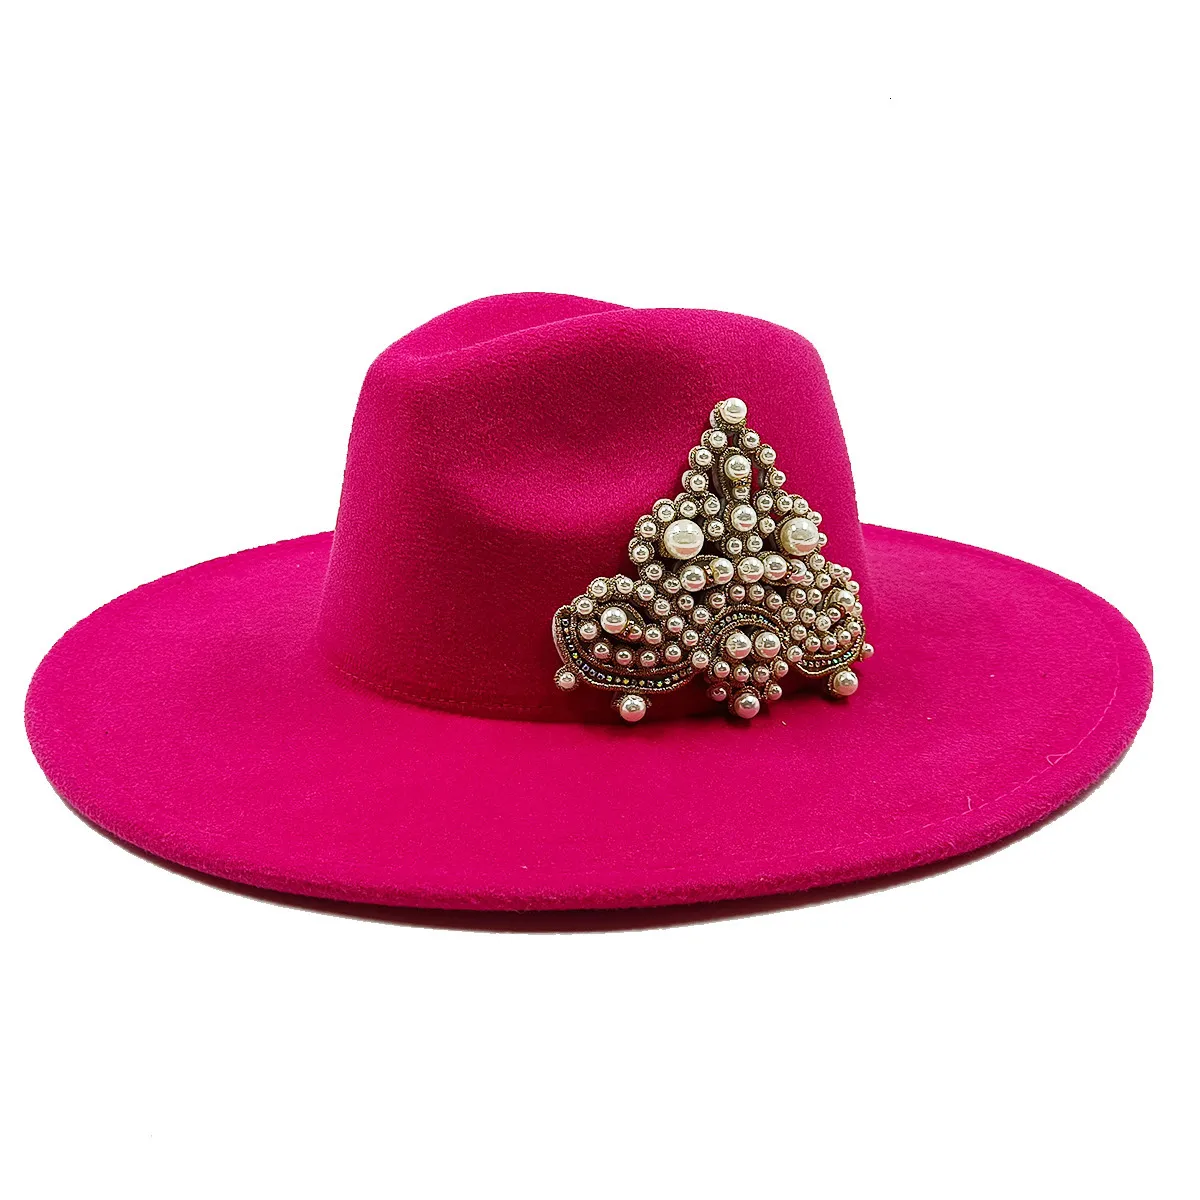 Wide Brim Hats Bucket Women s Hat Simple Church Derby Top Panama Solid Felt Fedoras for Women Jazz Cap Pearl Crown Accessories 230831